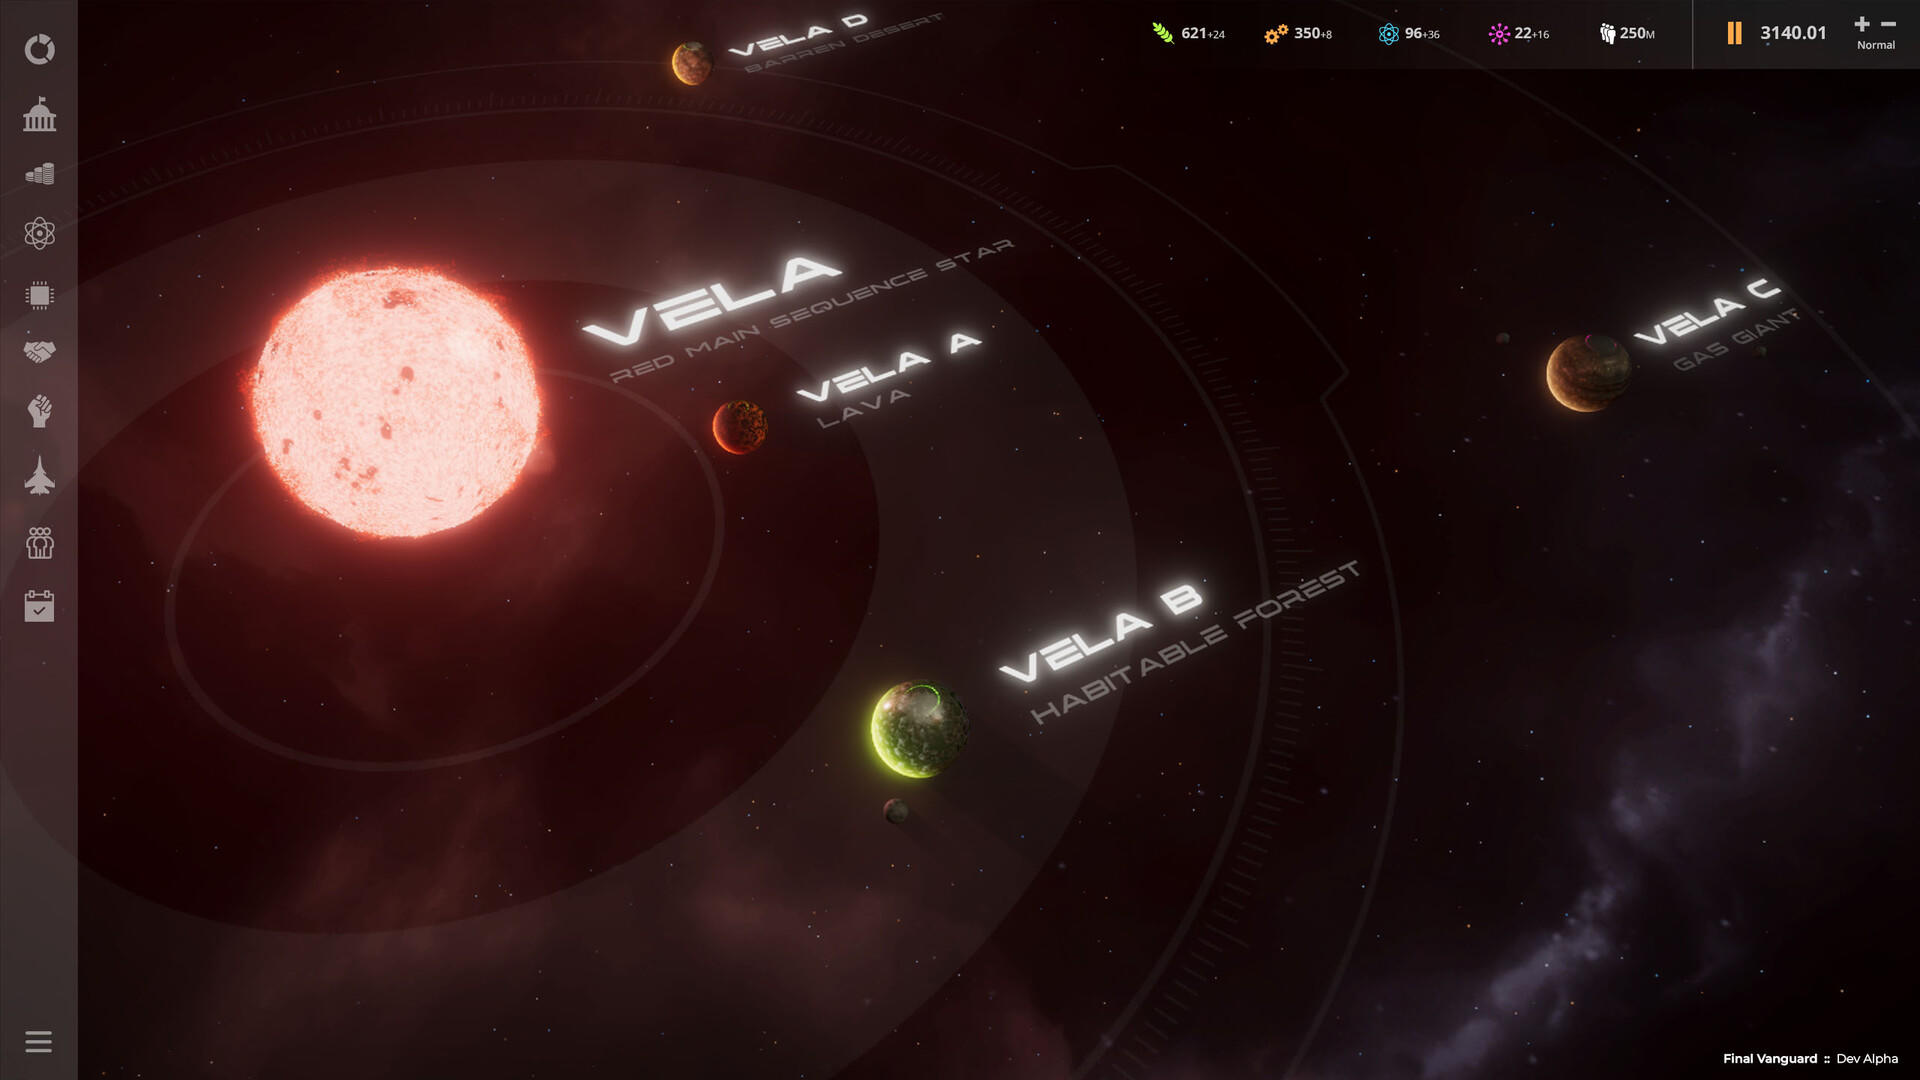 Screenshot 1 of Final Vanguard 